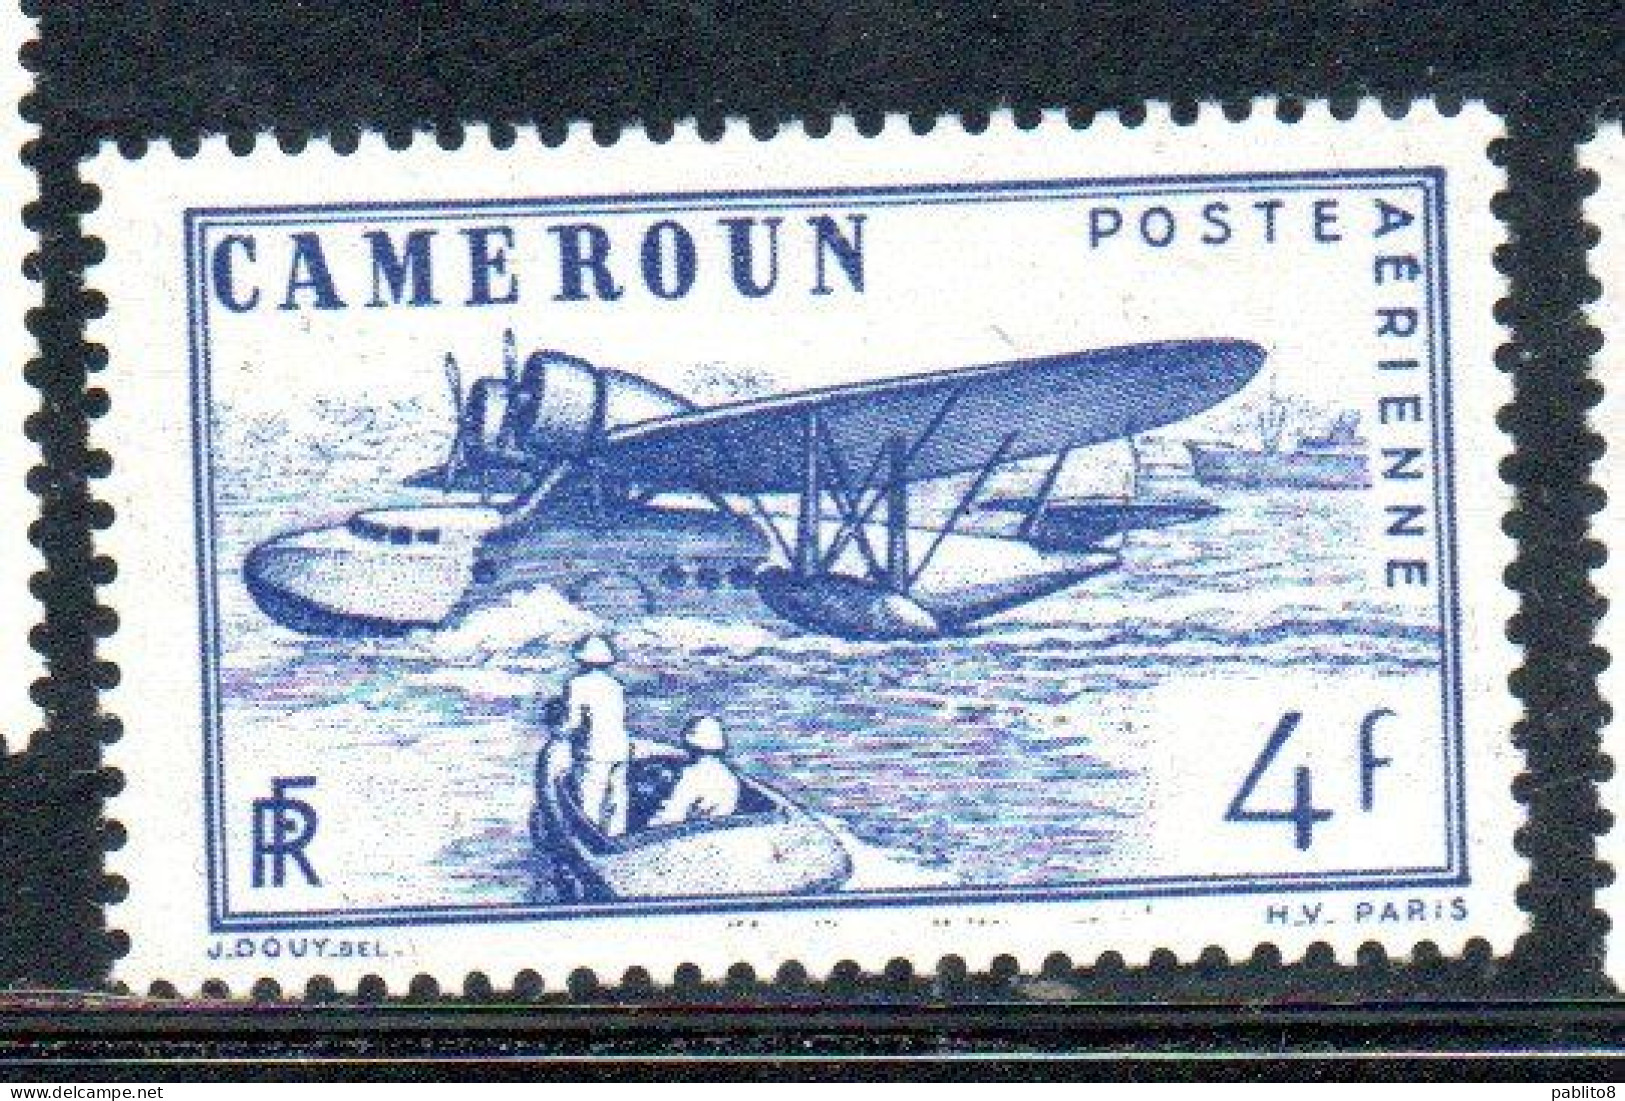 CAMEROUN CAMERUN 1943 1944 AIR POST MAIL AIRMAIL POSTA AEREA POST AERIENNE SEAPLANE ALIGHTING 4fr MNH - Airmail